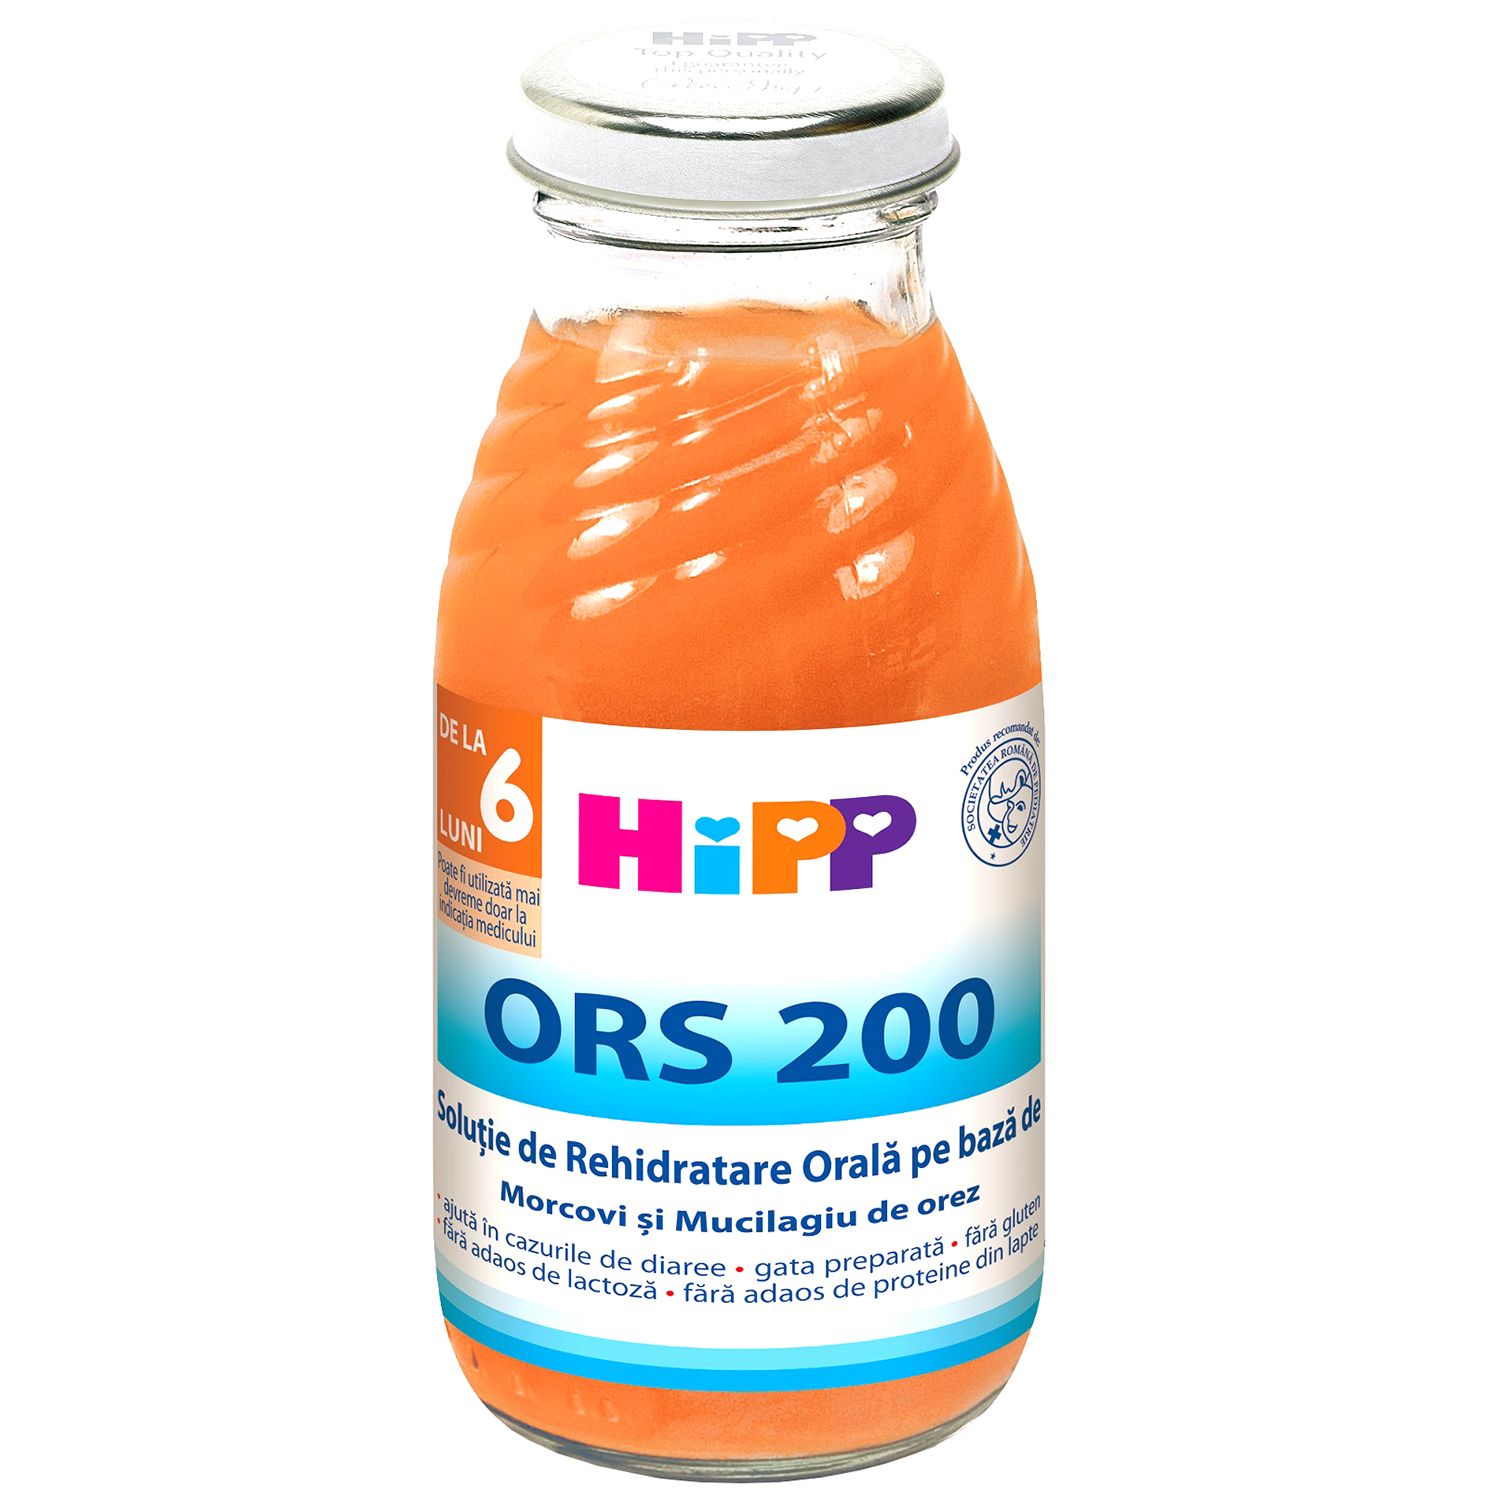 HIPP 835 ORS BAUTURA IMPOTRIVA DIAREEI 200ML imagine 2021 Helpnet.ro